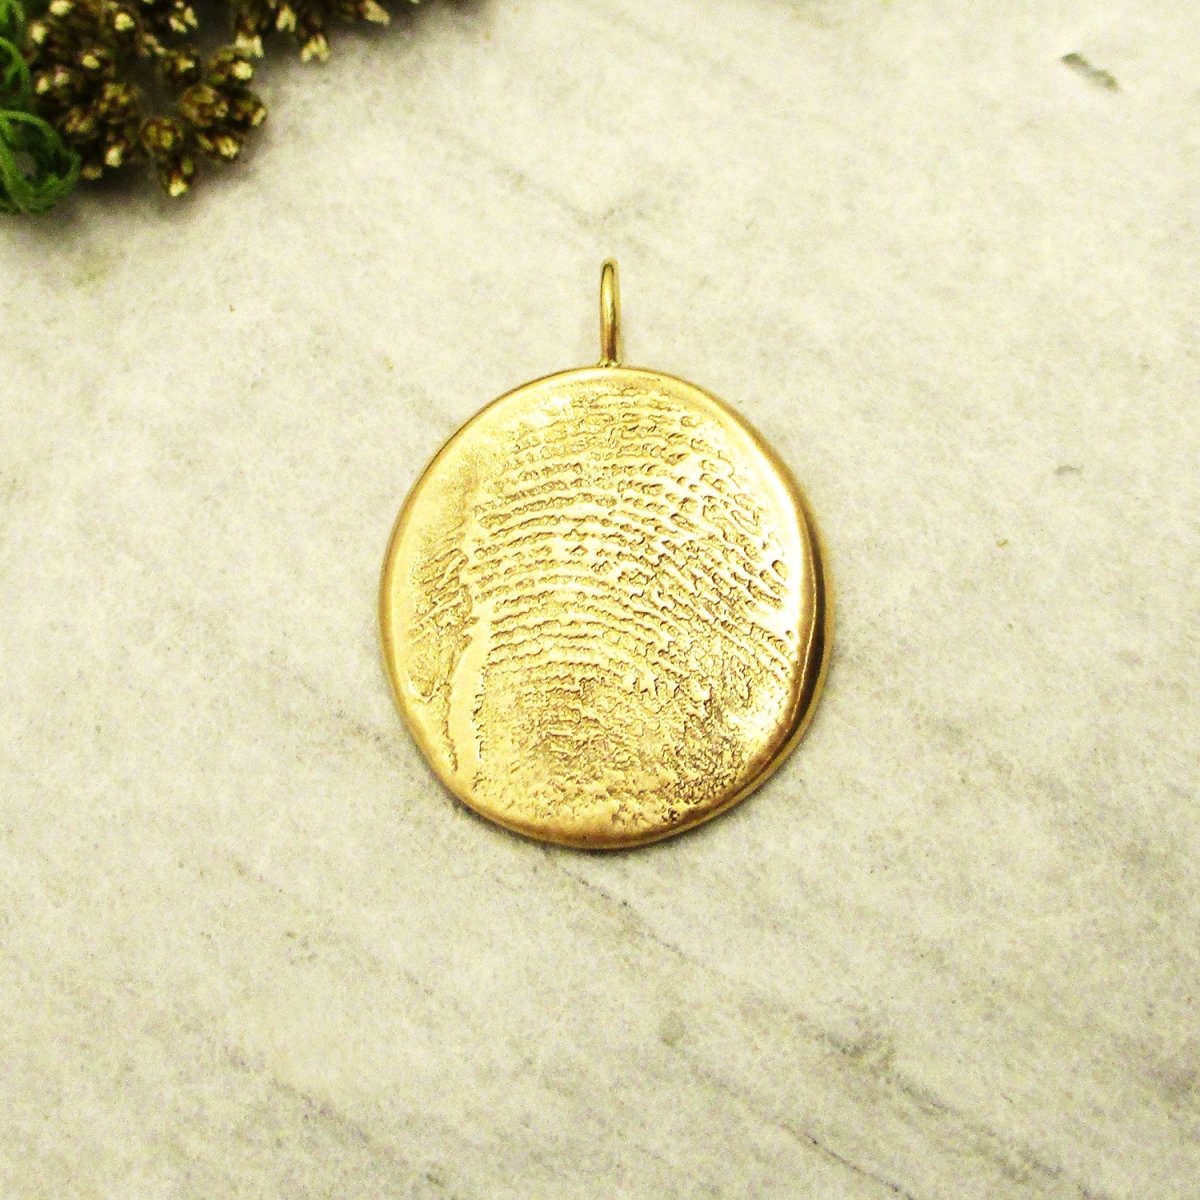 14k Gold Organic Oval Shaped Fingerprint Pendant from Flat Ink Print - Luxe Design Jewellery